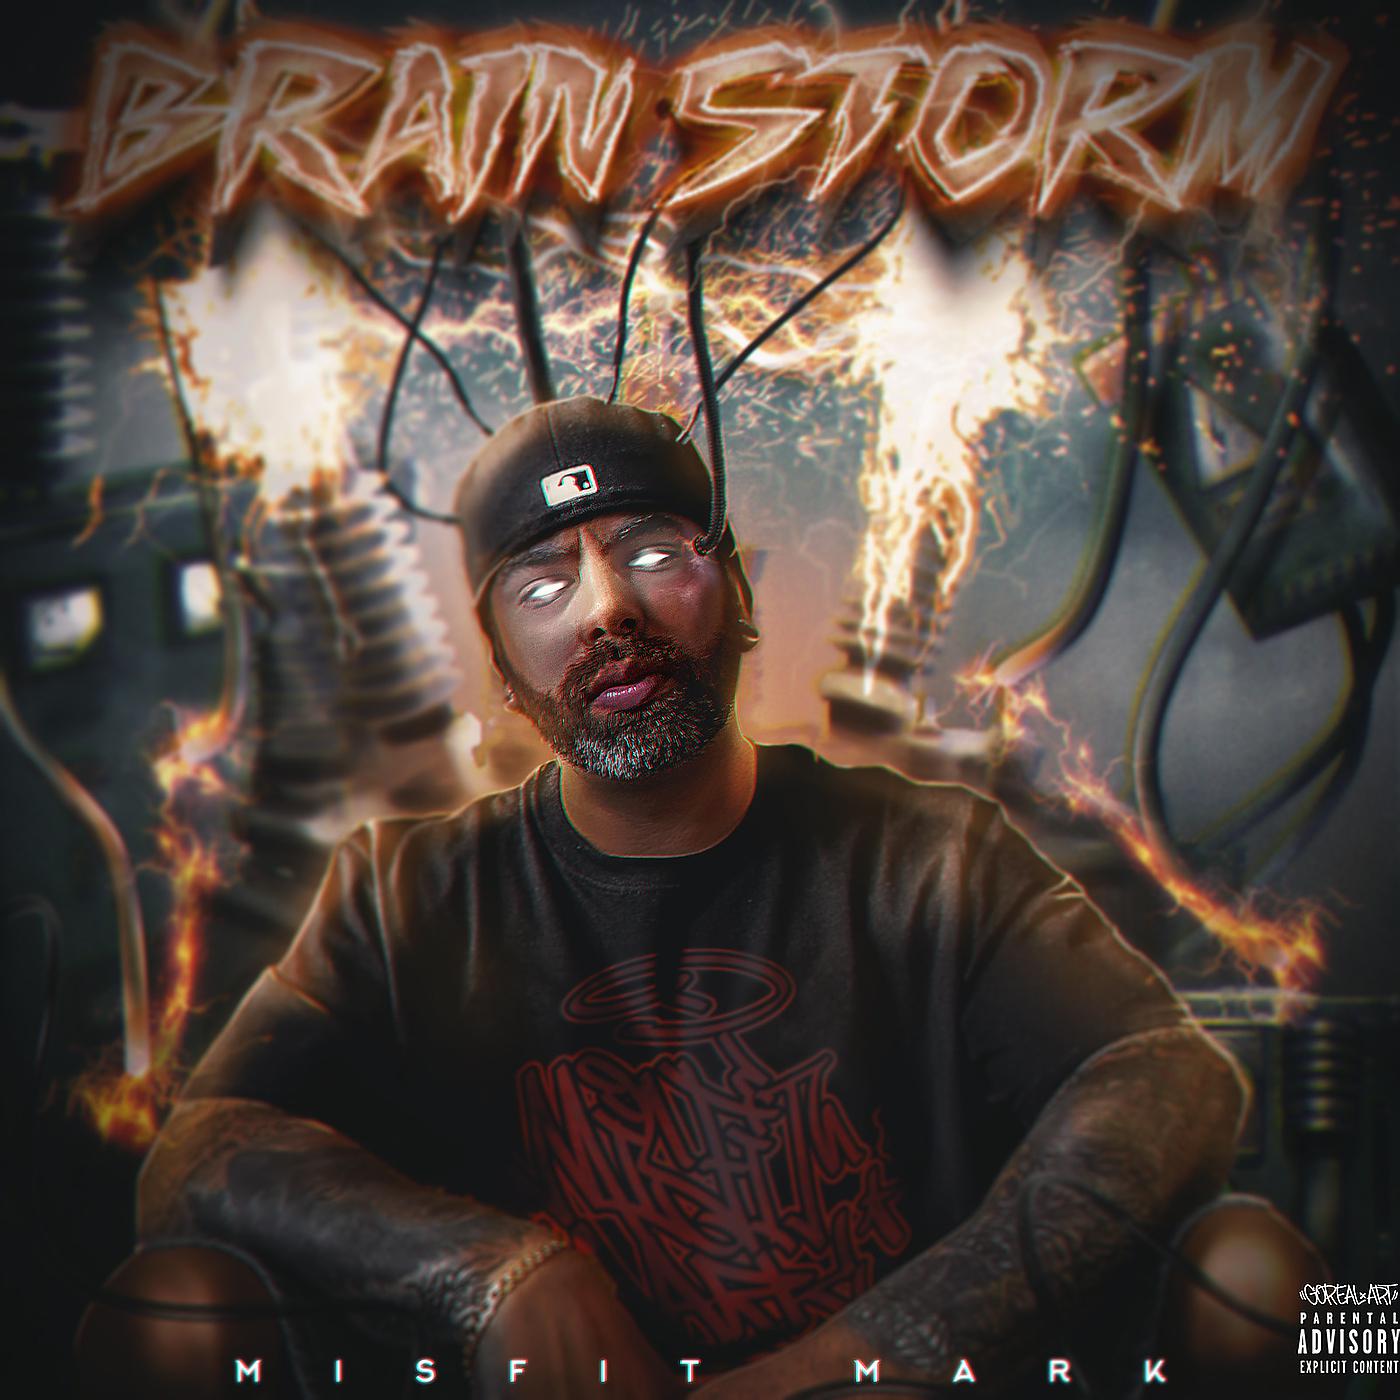 Постер альбома Brain Storm